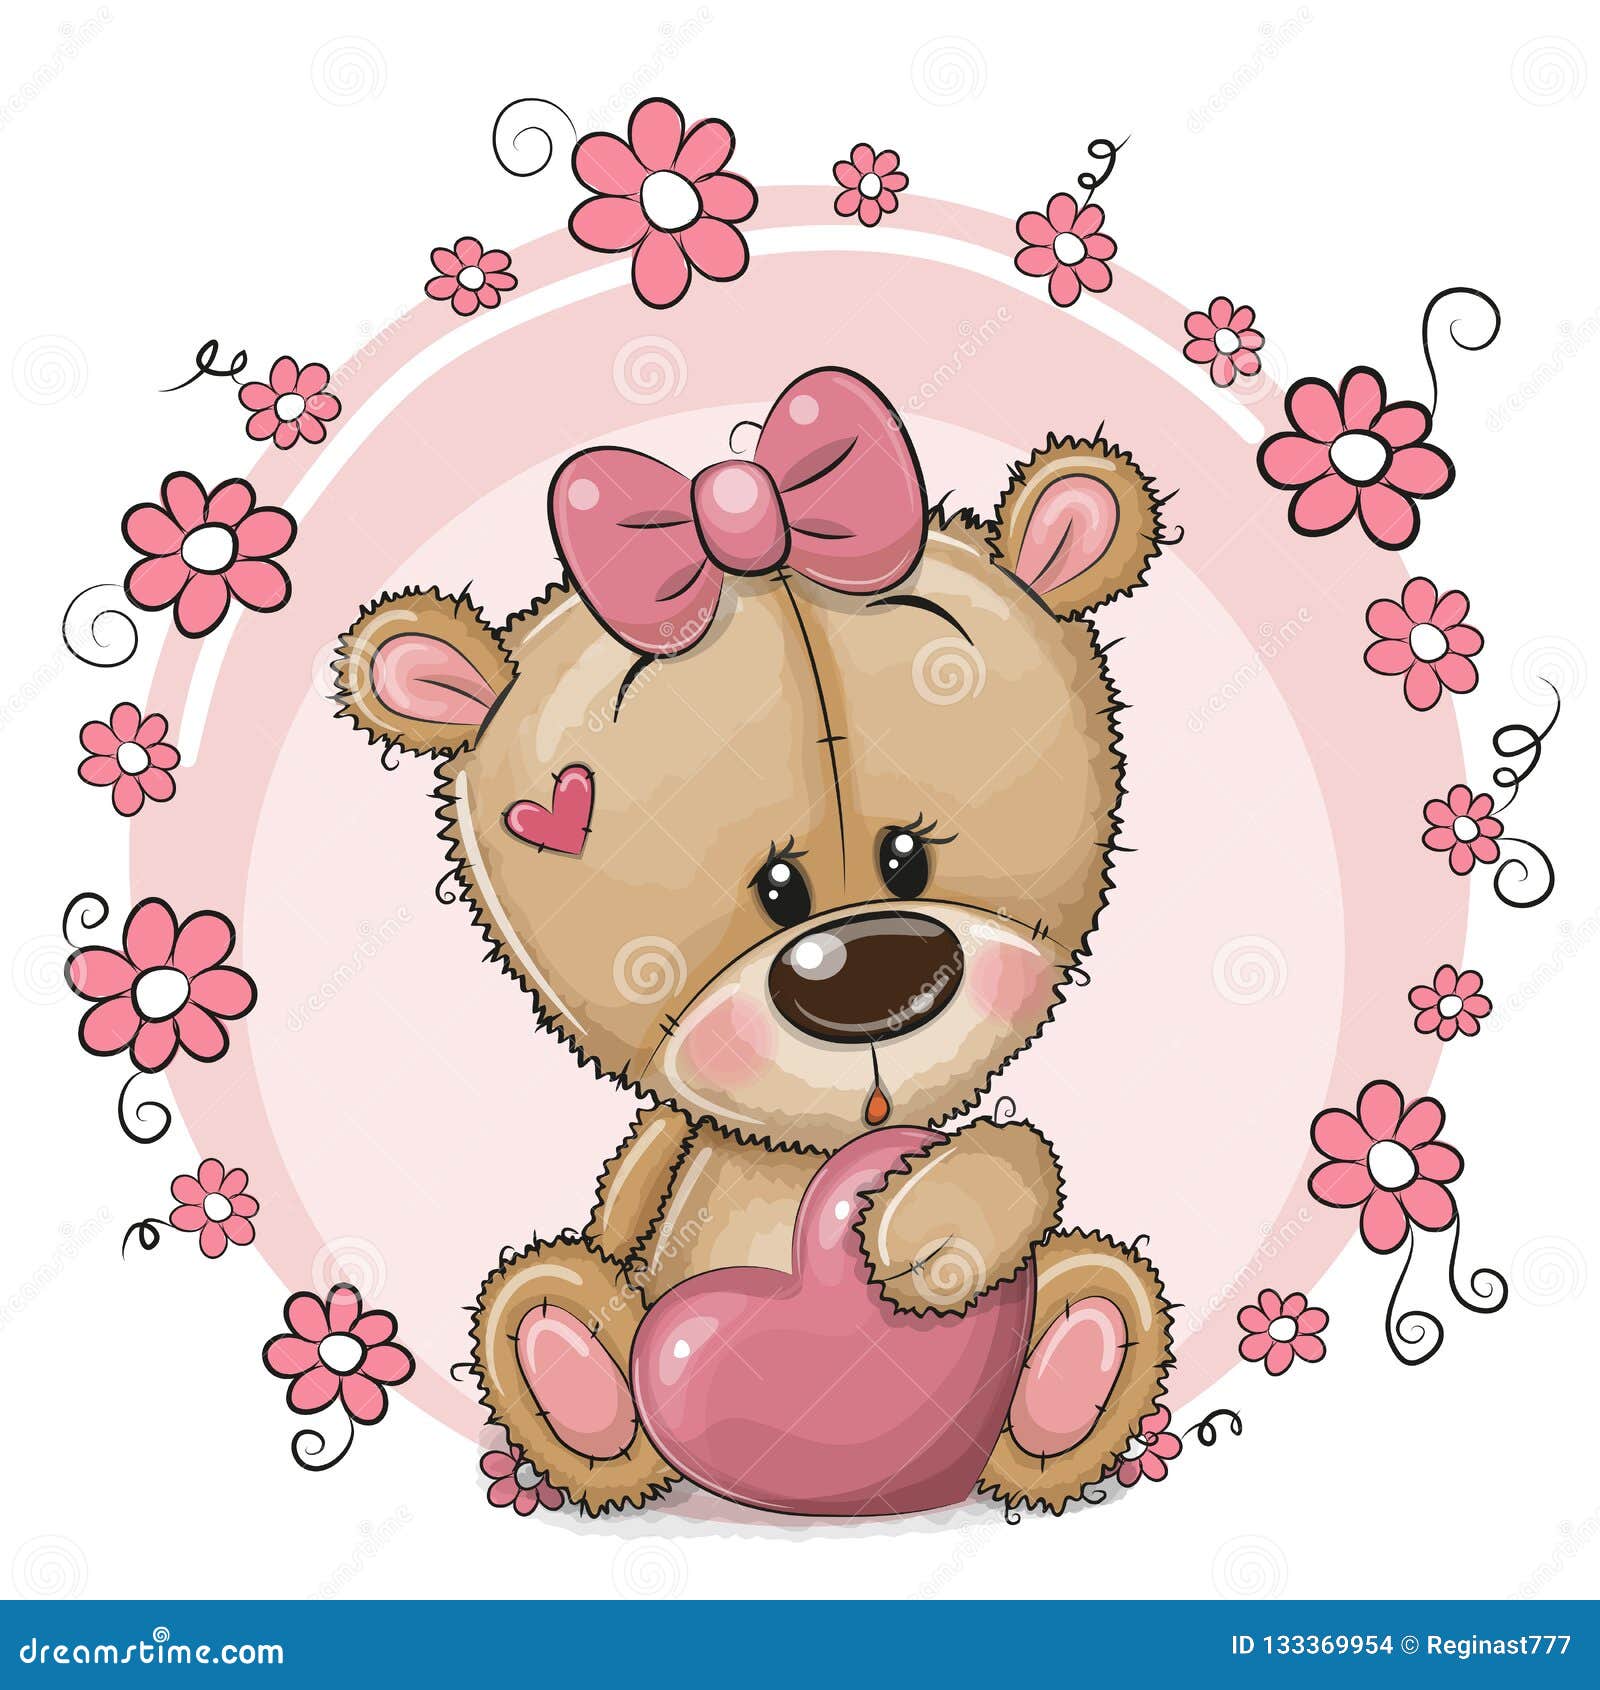 https://thumbs.dreamstime.com/z/greeting-card-cute-cartoon-teddy-bear-girl-heart-flowers-cute-cartoon-teddy-bear-girl-heart-flowers-133369954.jpg